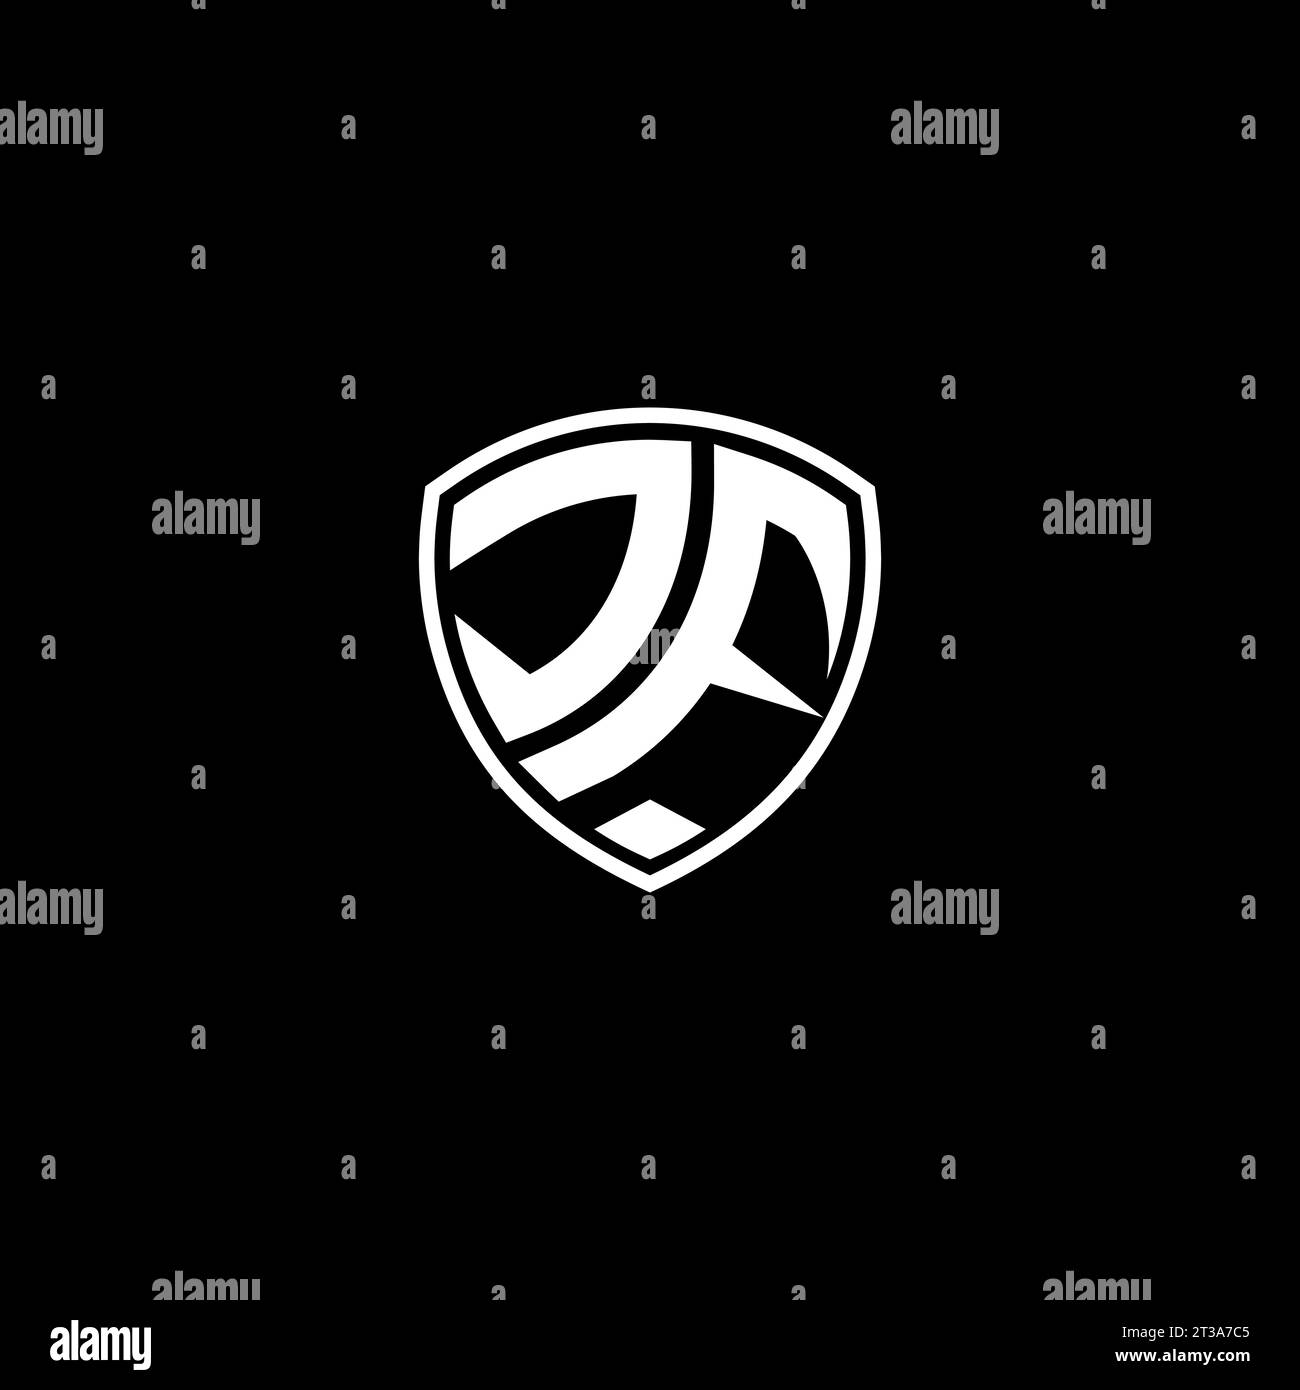 JF logo monogram emblem style with shield shape design template ideas Stock Vector